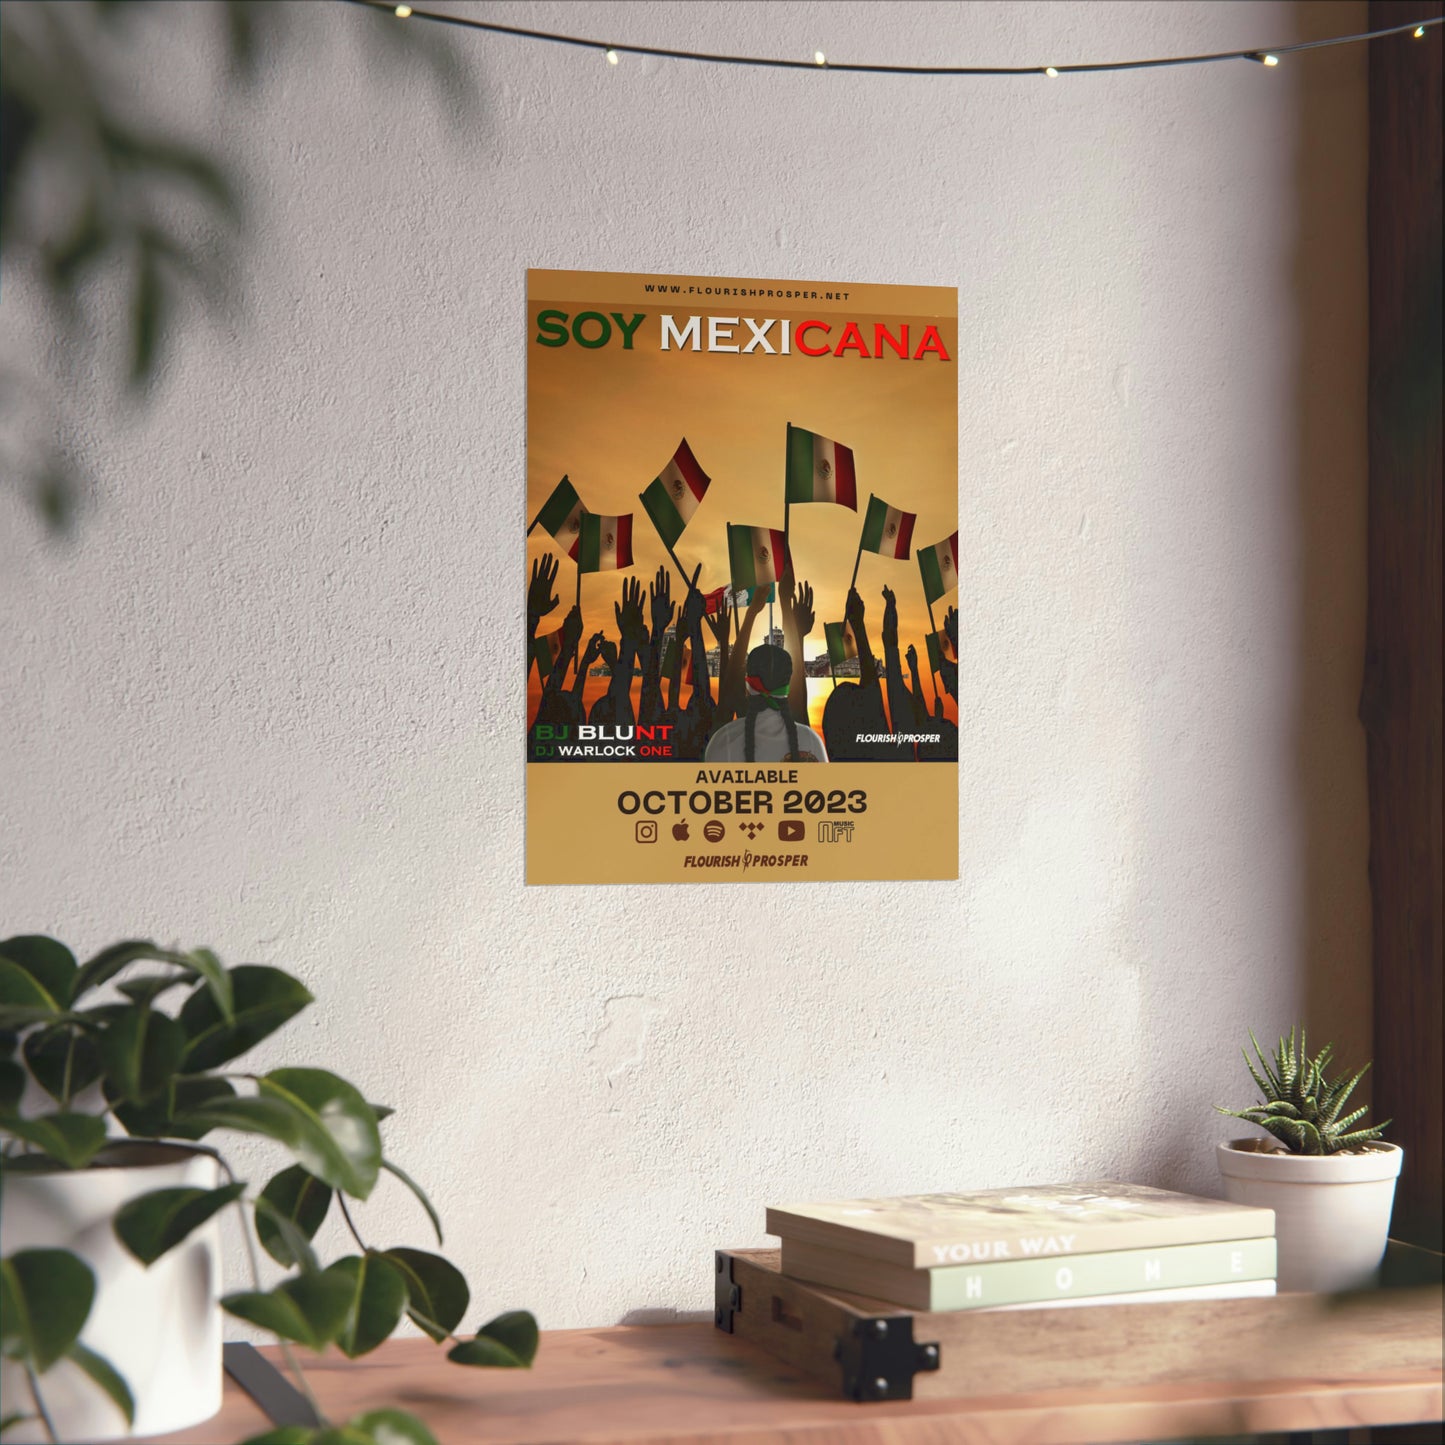 BJ Blunt & DJ Warlock One "Soy Mexicana" Matte Vertical Posters